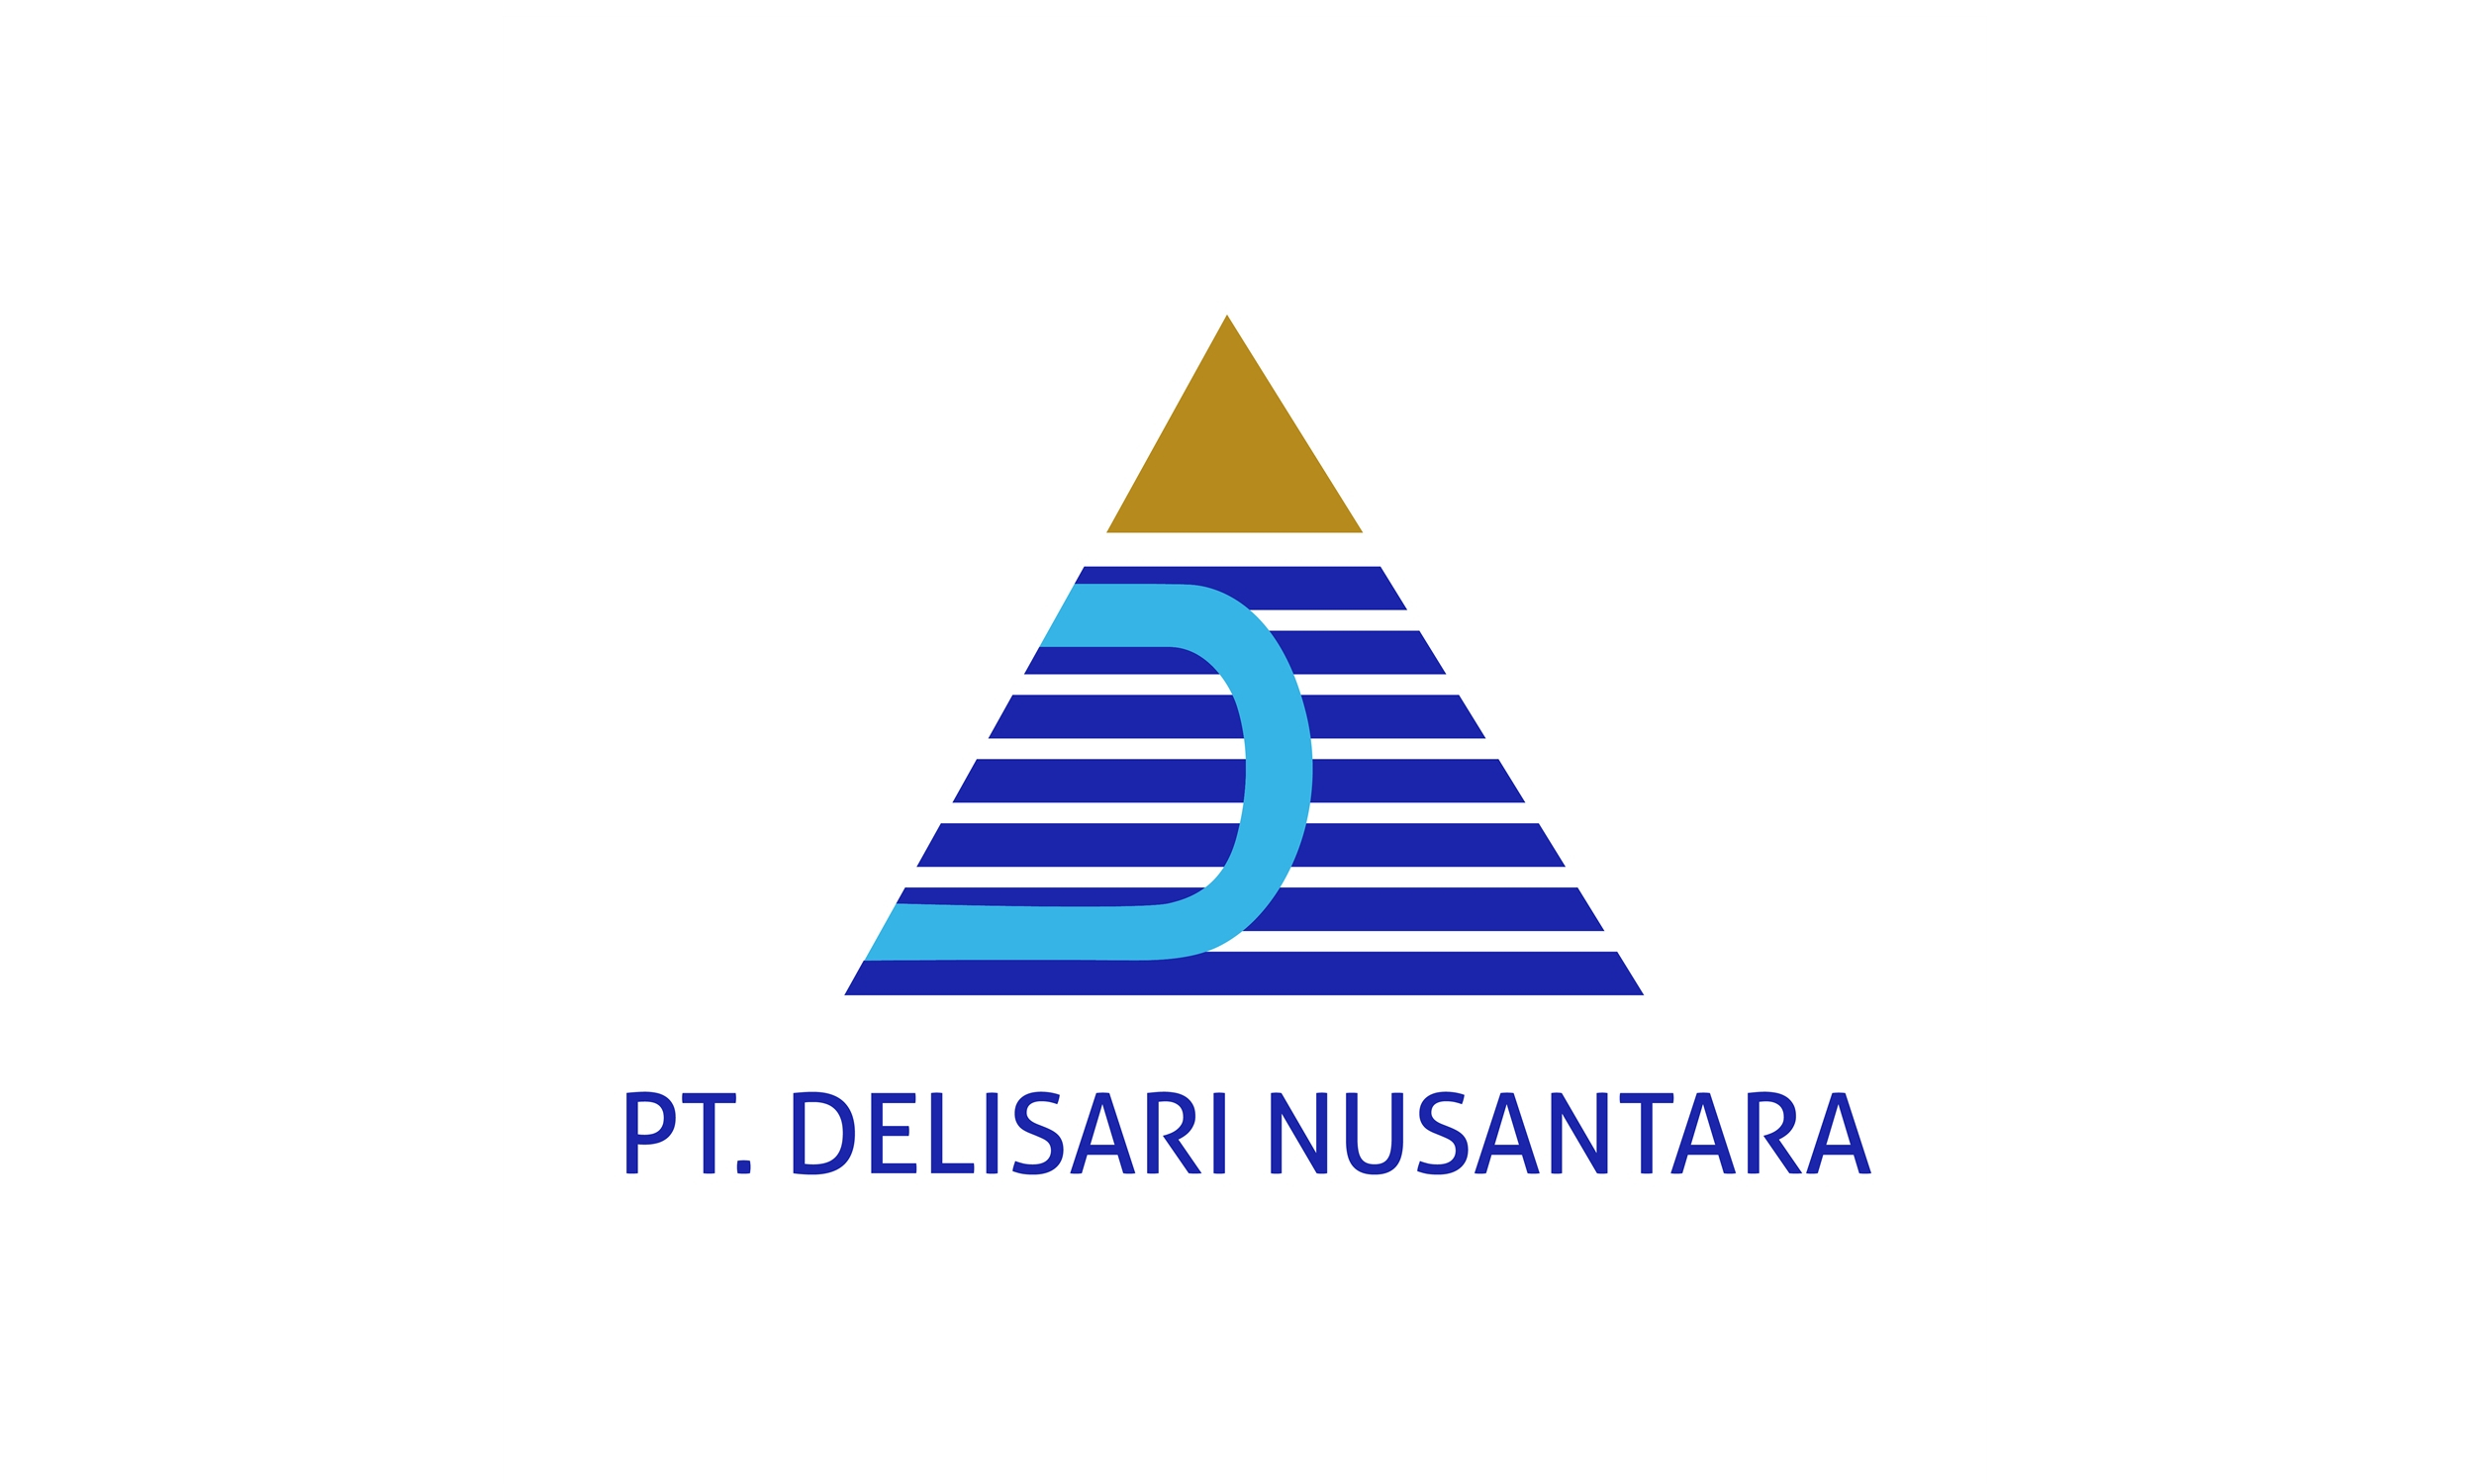 ARUBA: Challenges in Managing More than 20 Network Points of PT Delisari Nusantara